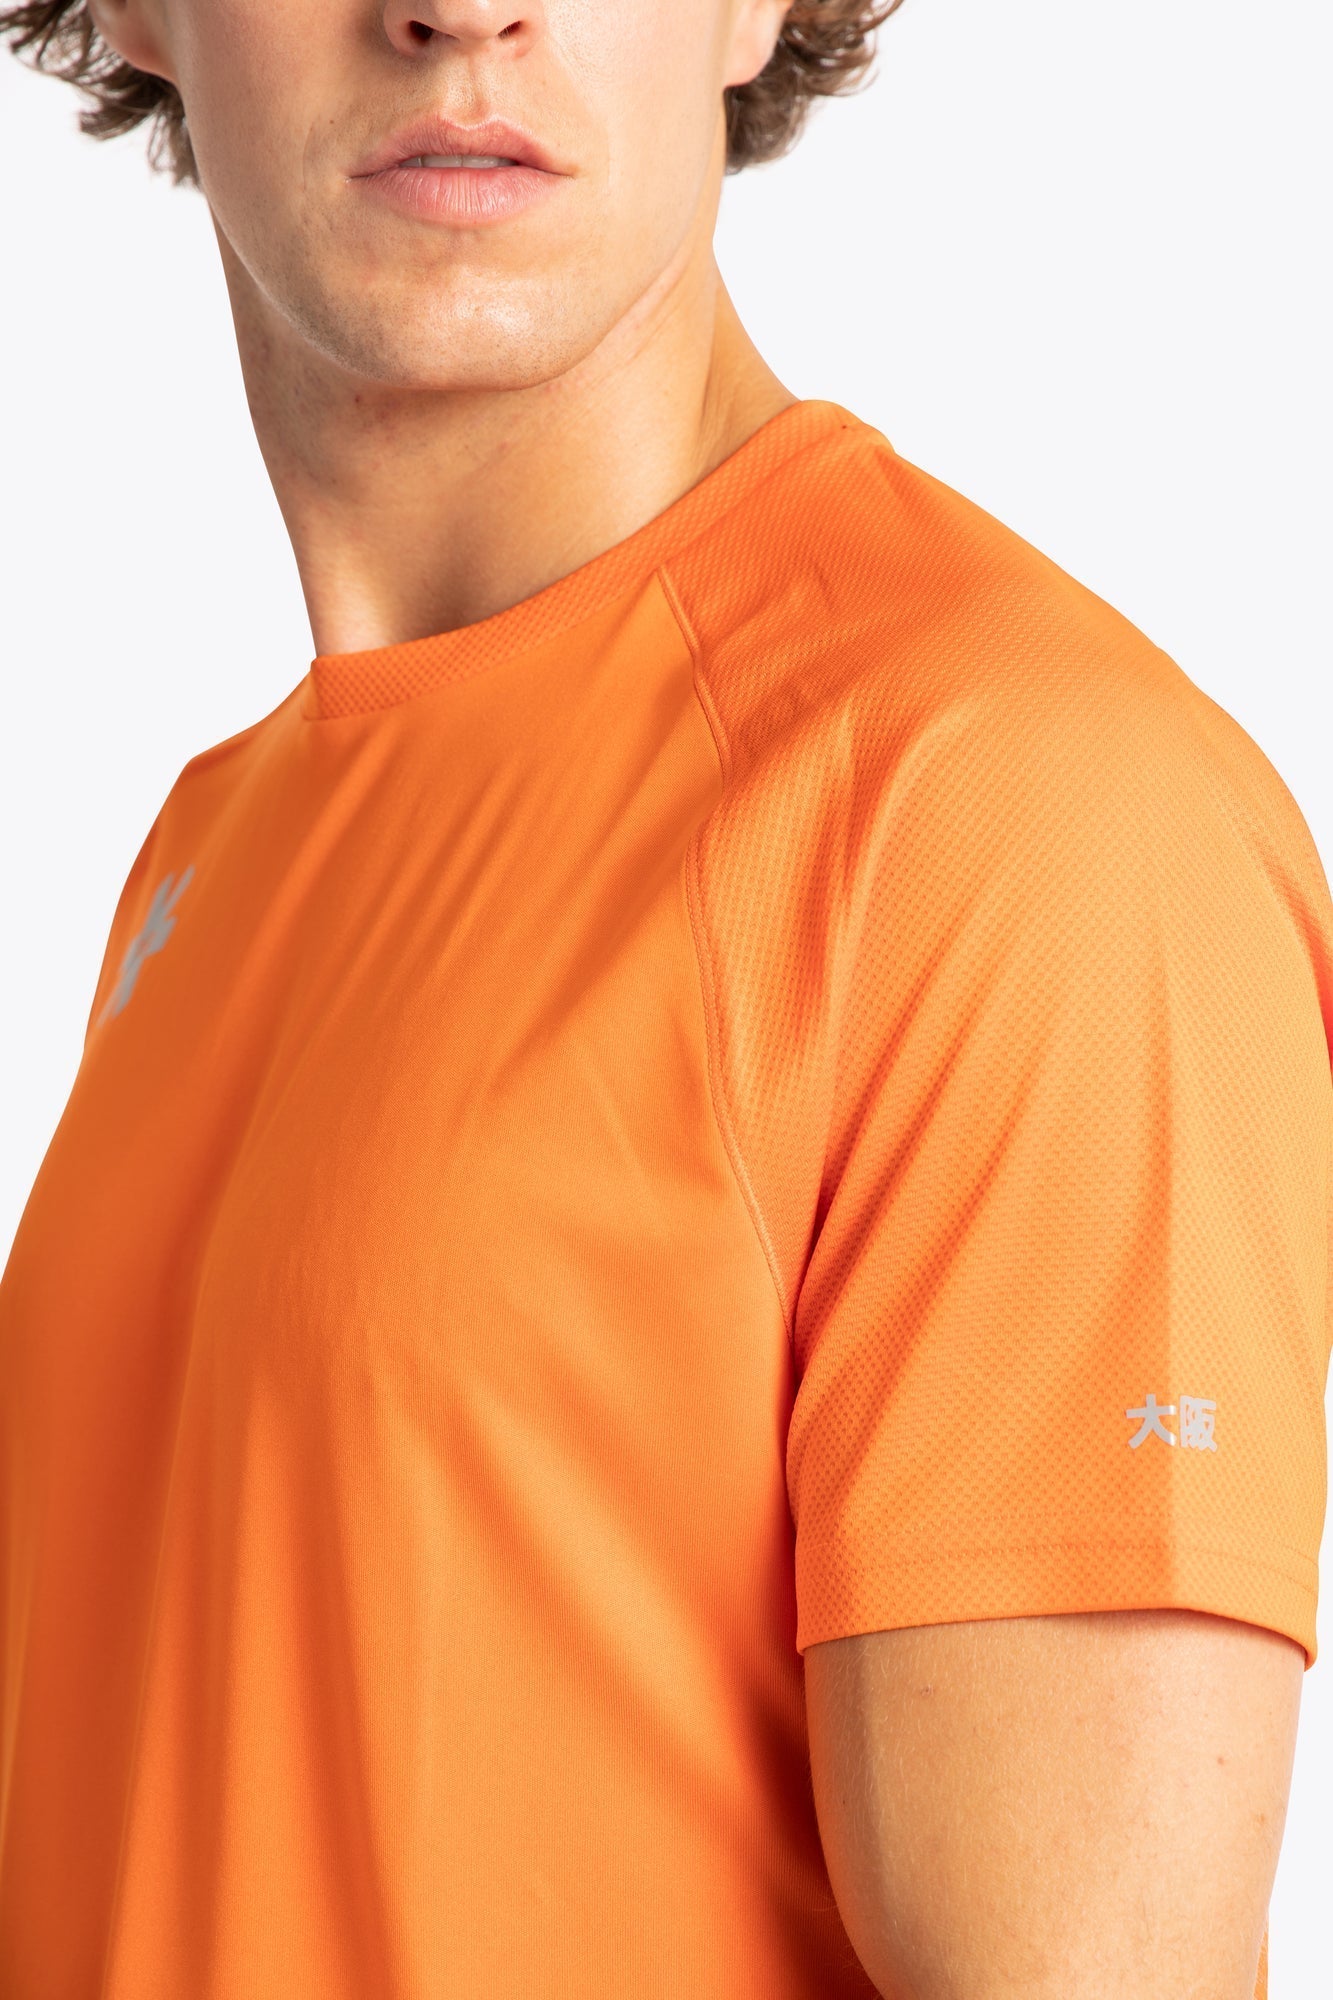 Osaka Mannen Training T-shirt (Oranje)